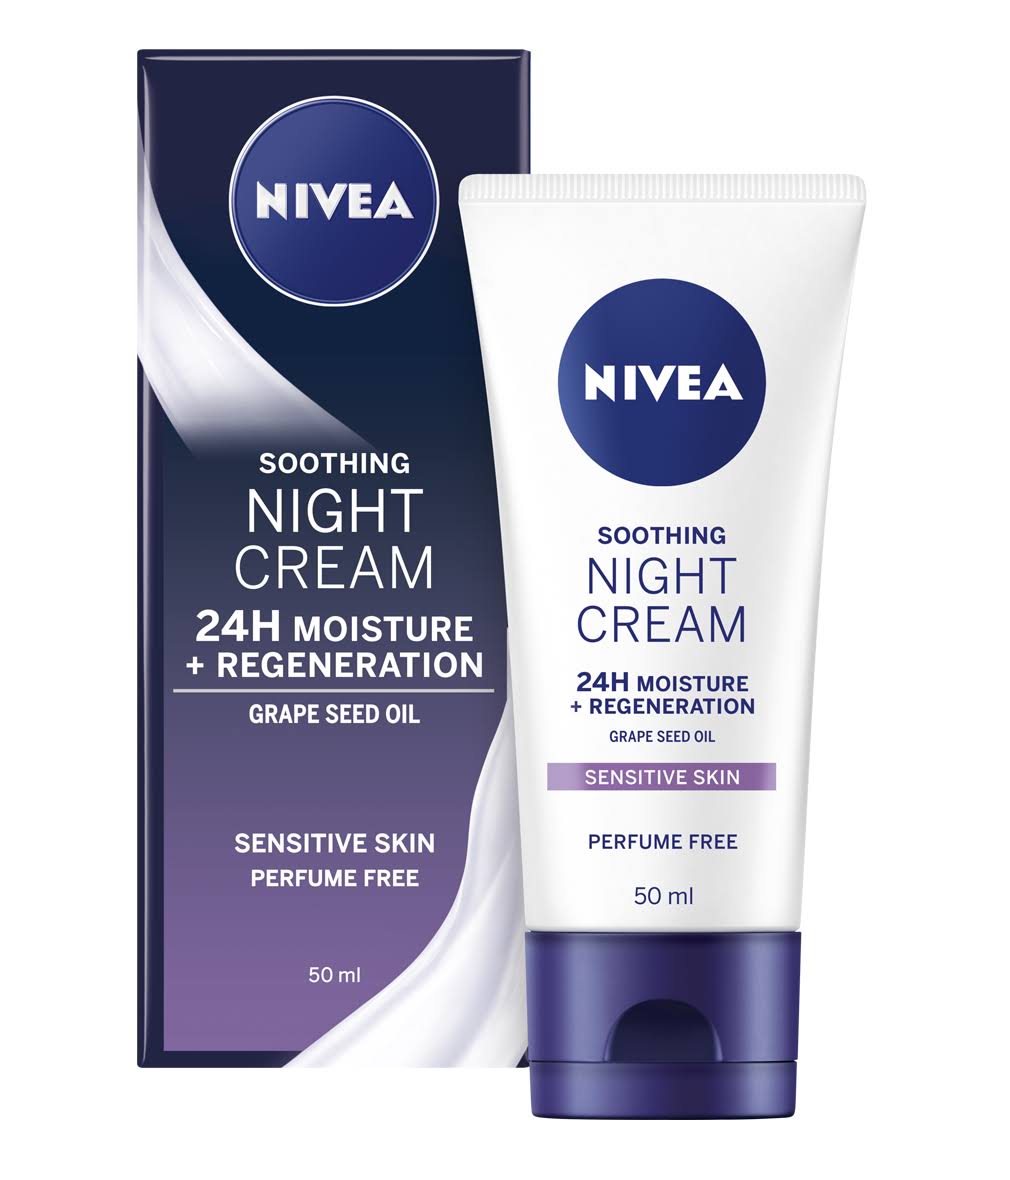 NIVEA Daily Essentials Sensitive Night Cream - 50ml